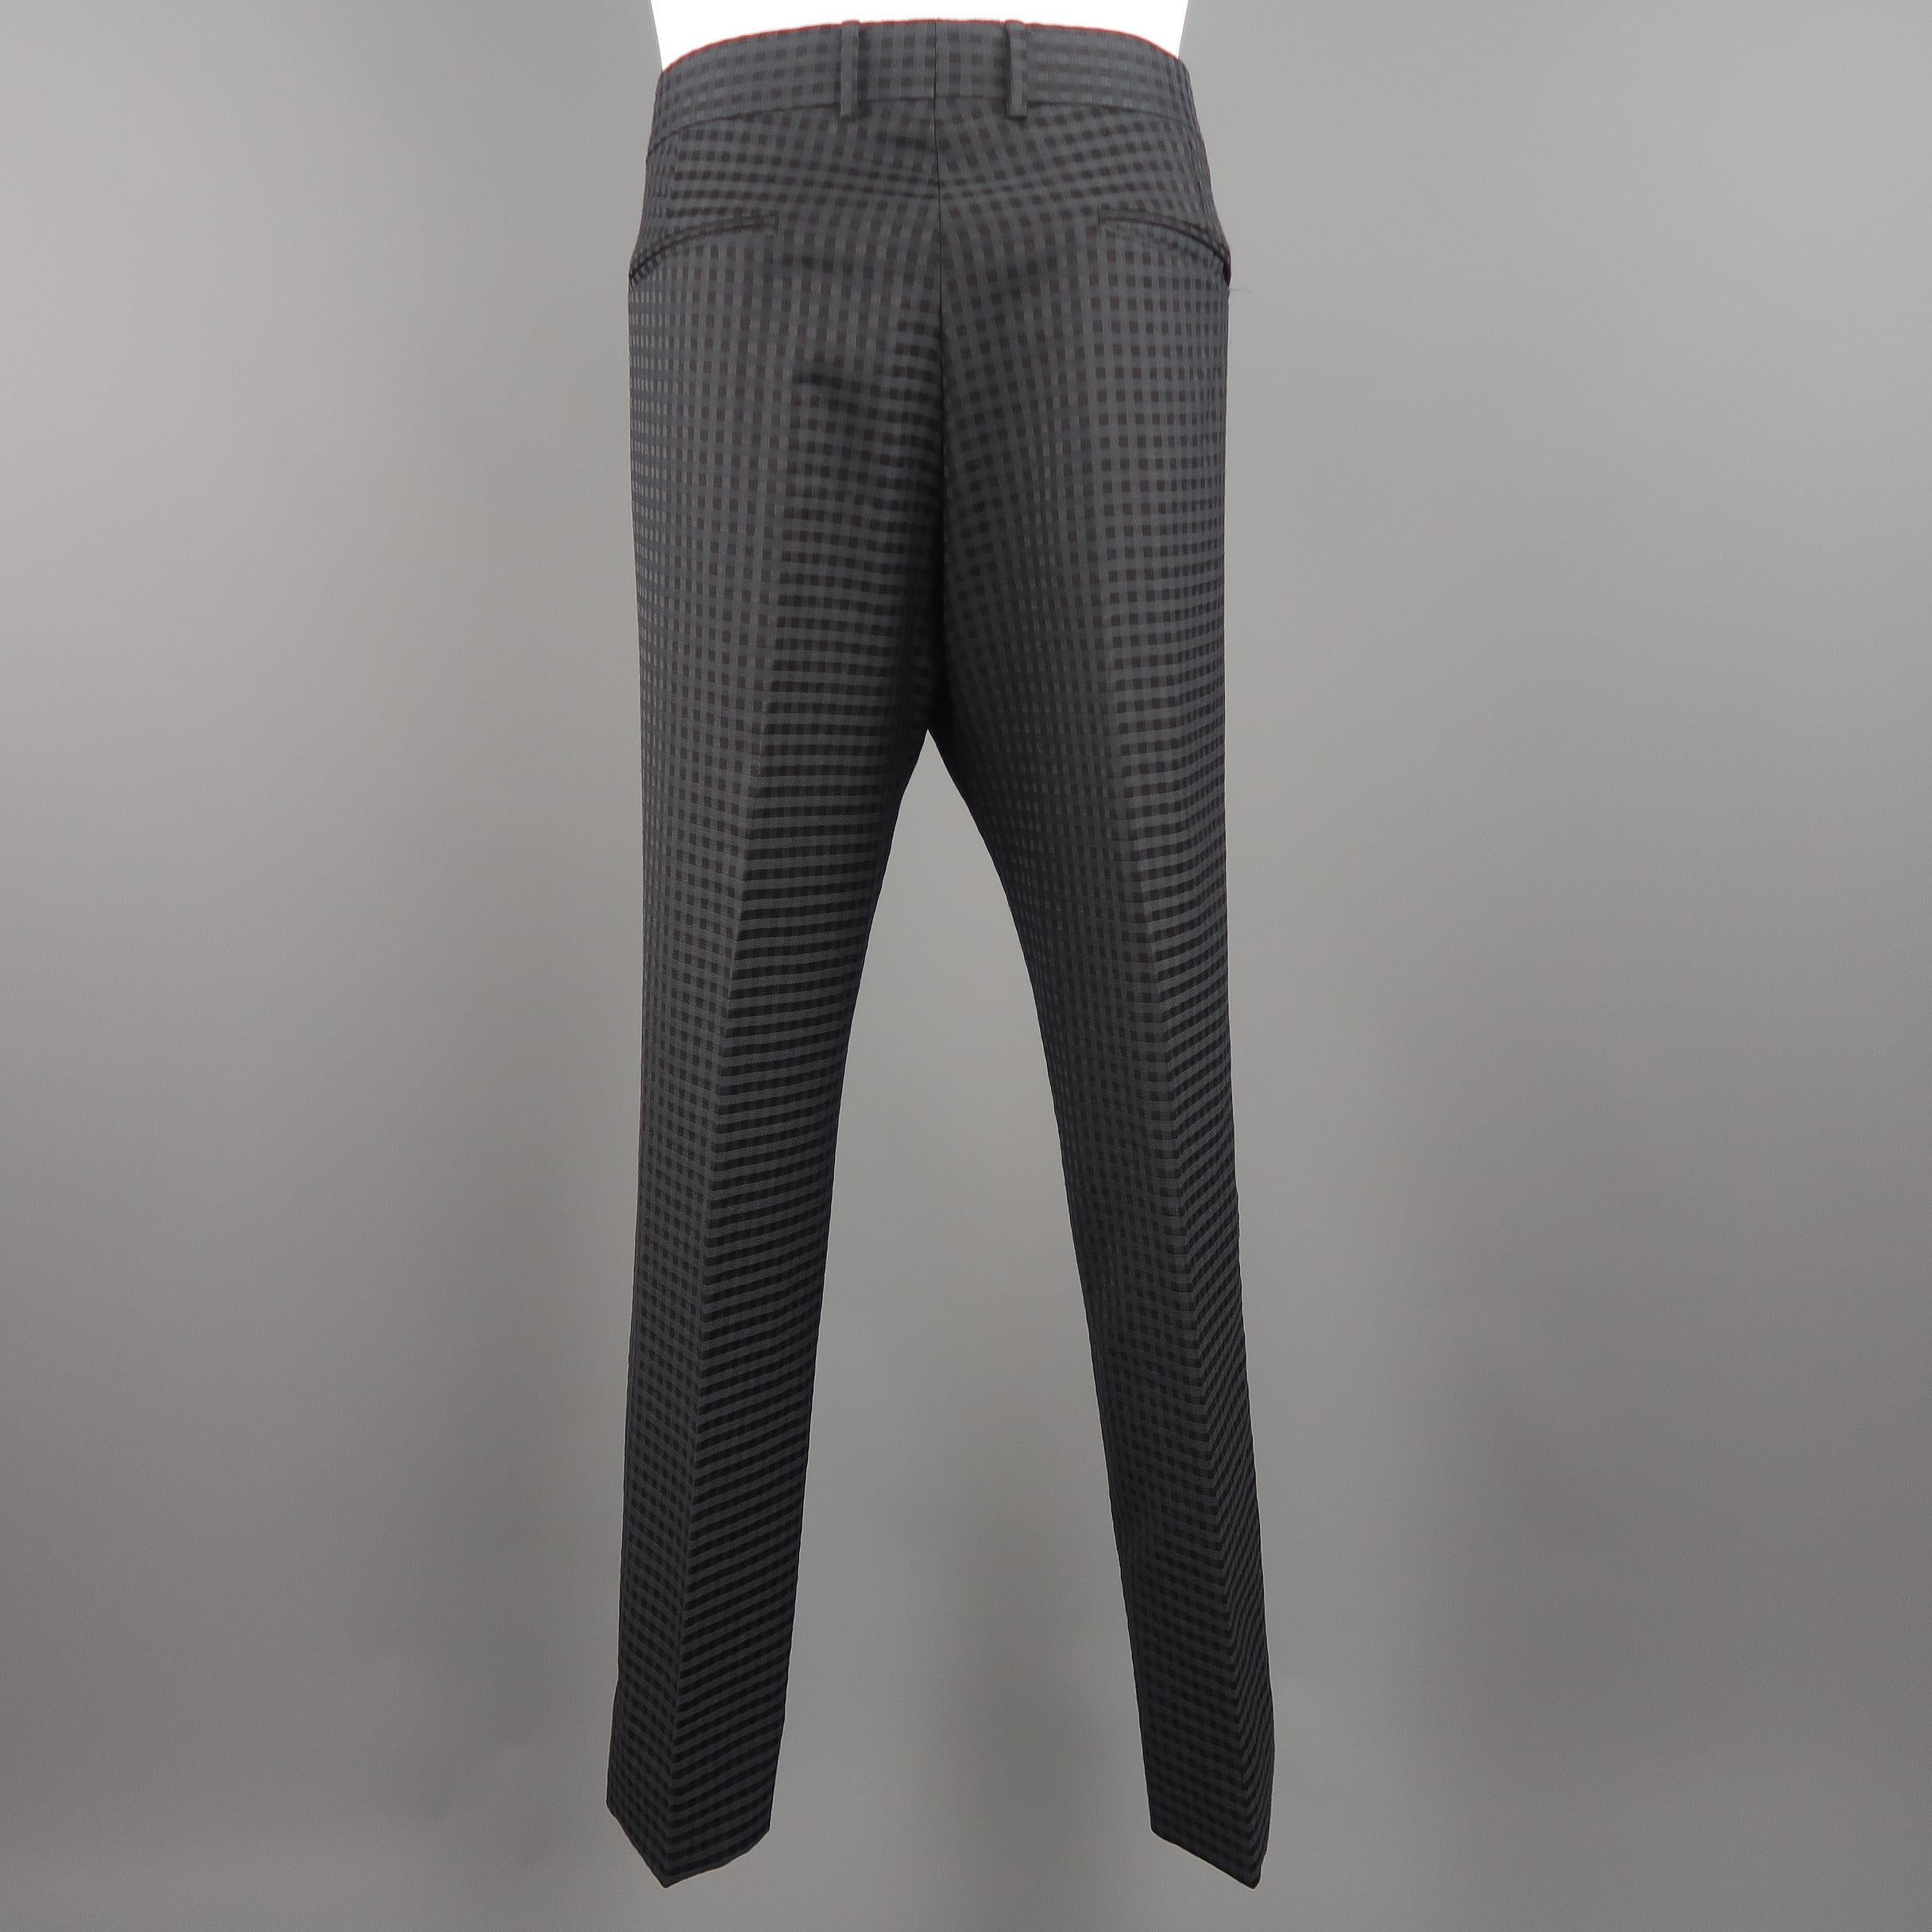 Men's GUCCI Size 32 Black Gingham Plaid Textured Wool Dress Pants